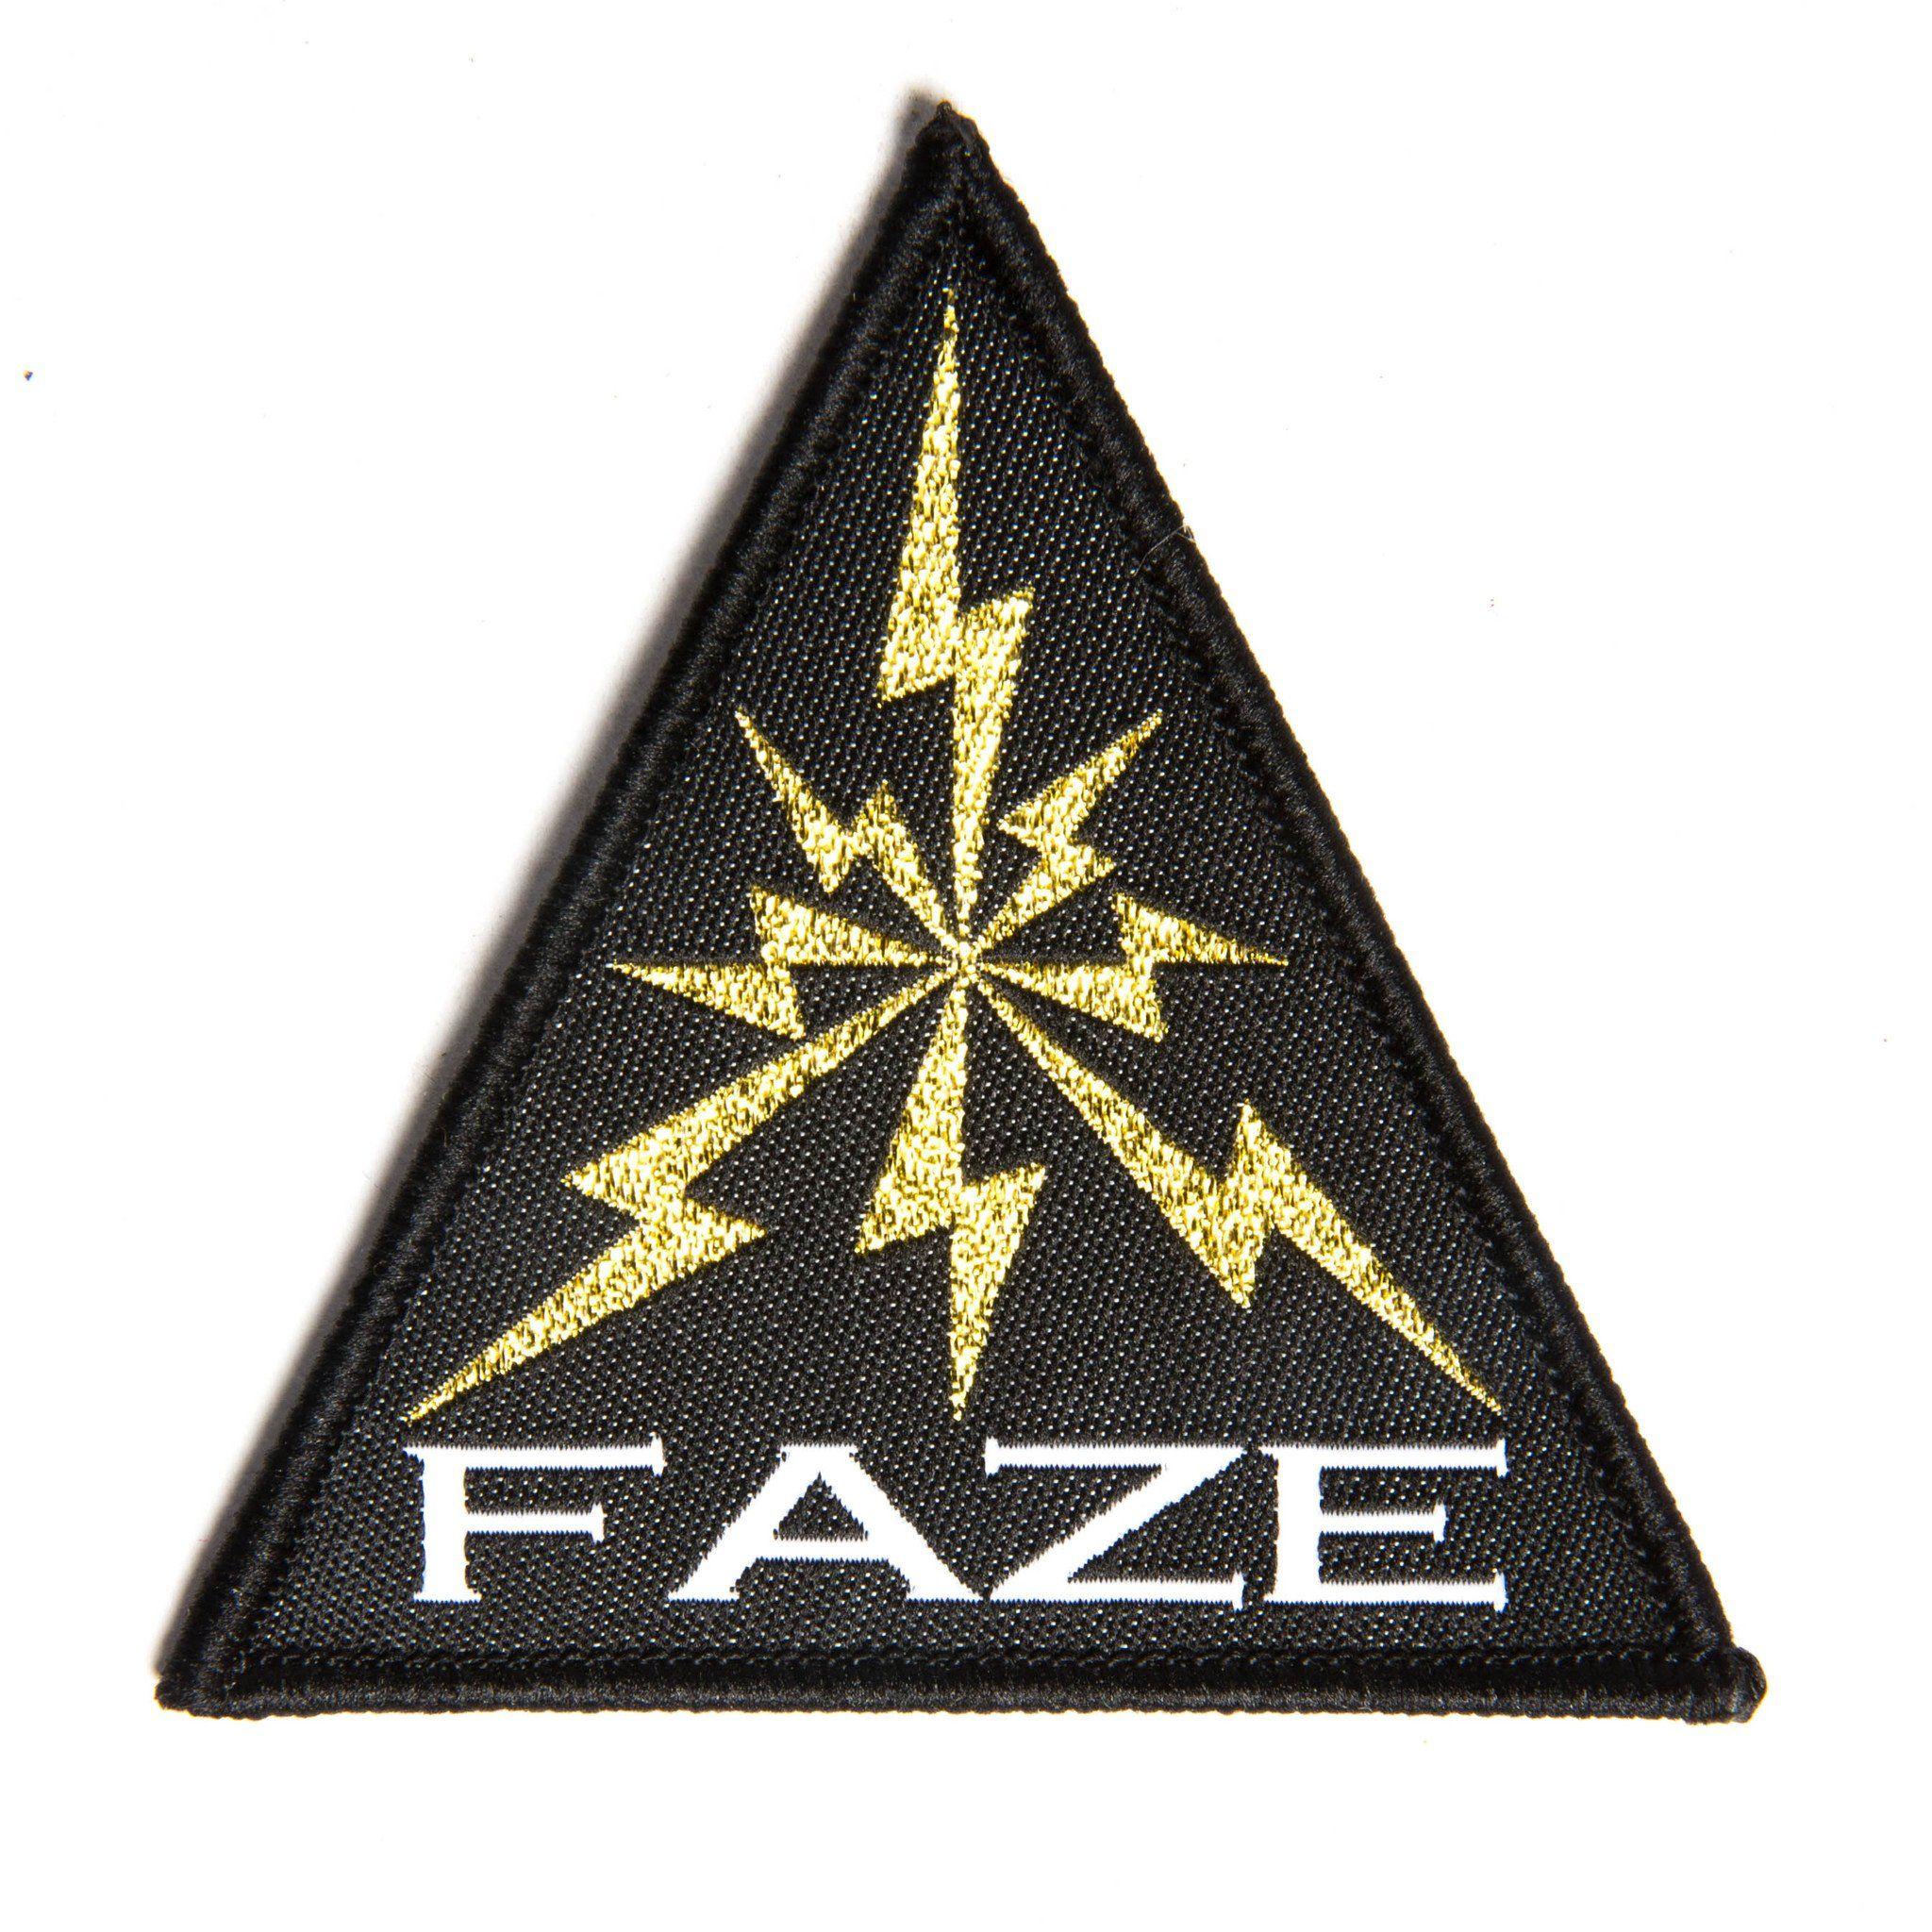 Google Triangle Logo - Large FAZE Triangle Logo Patch in black